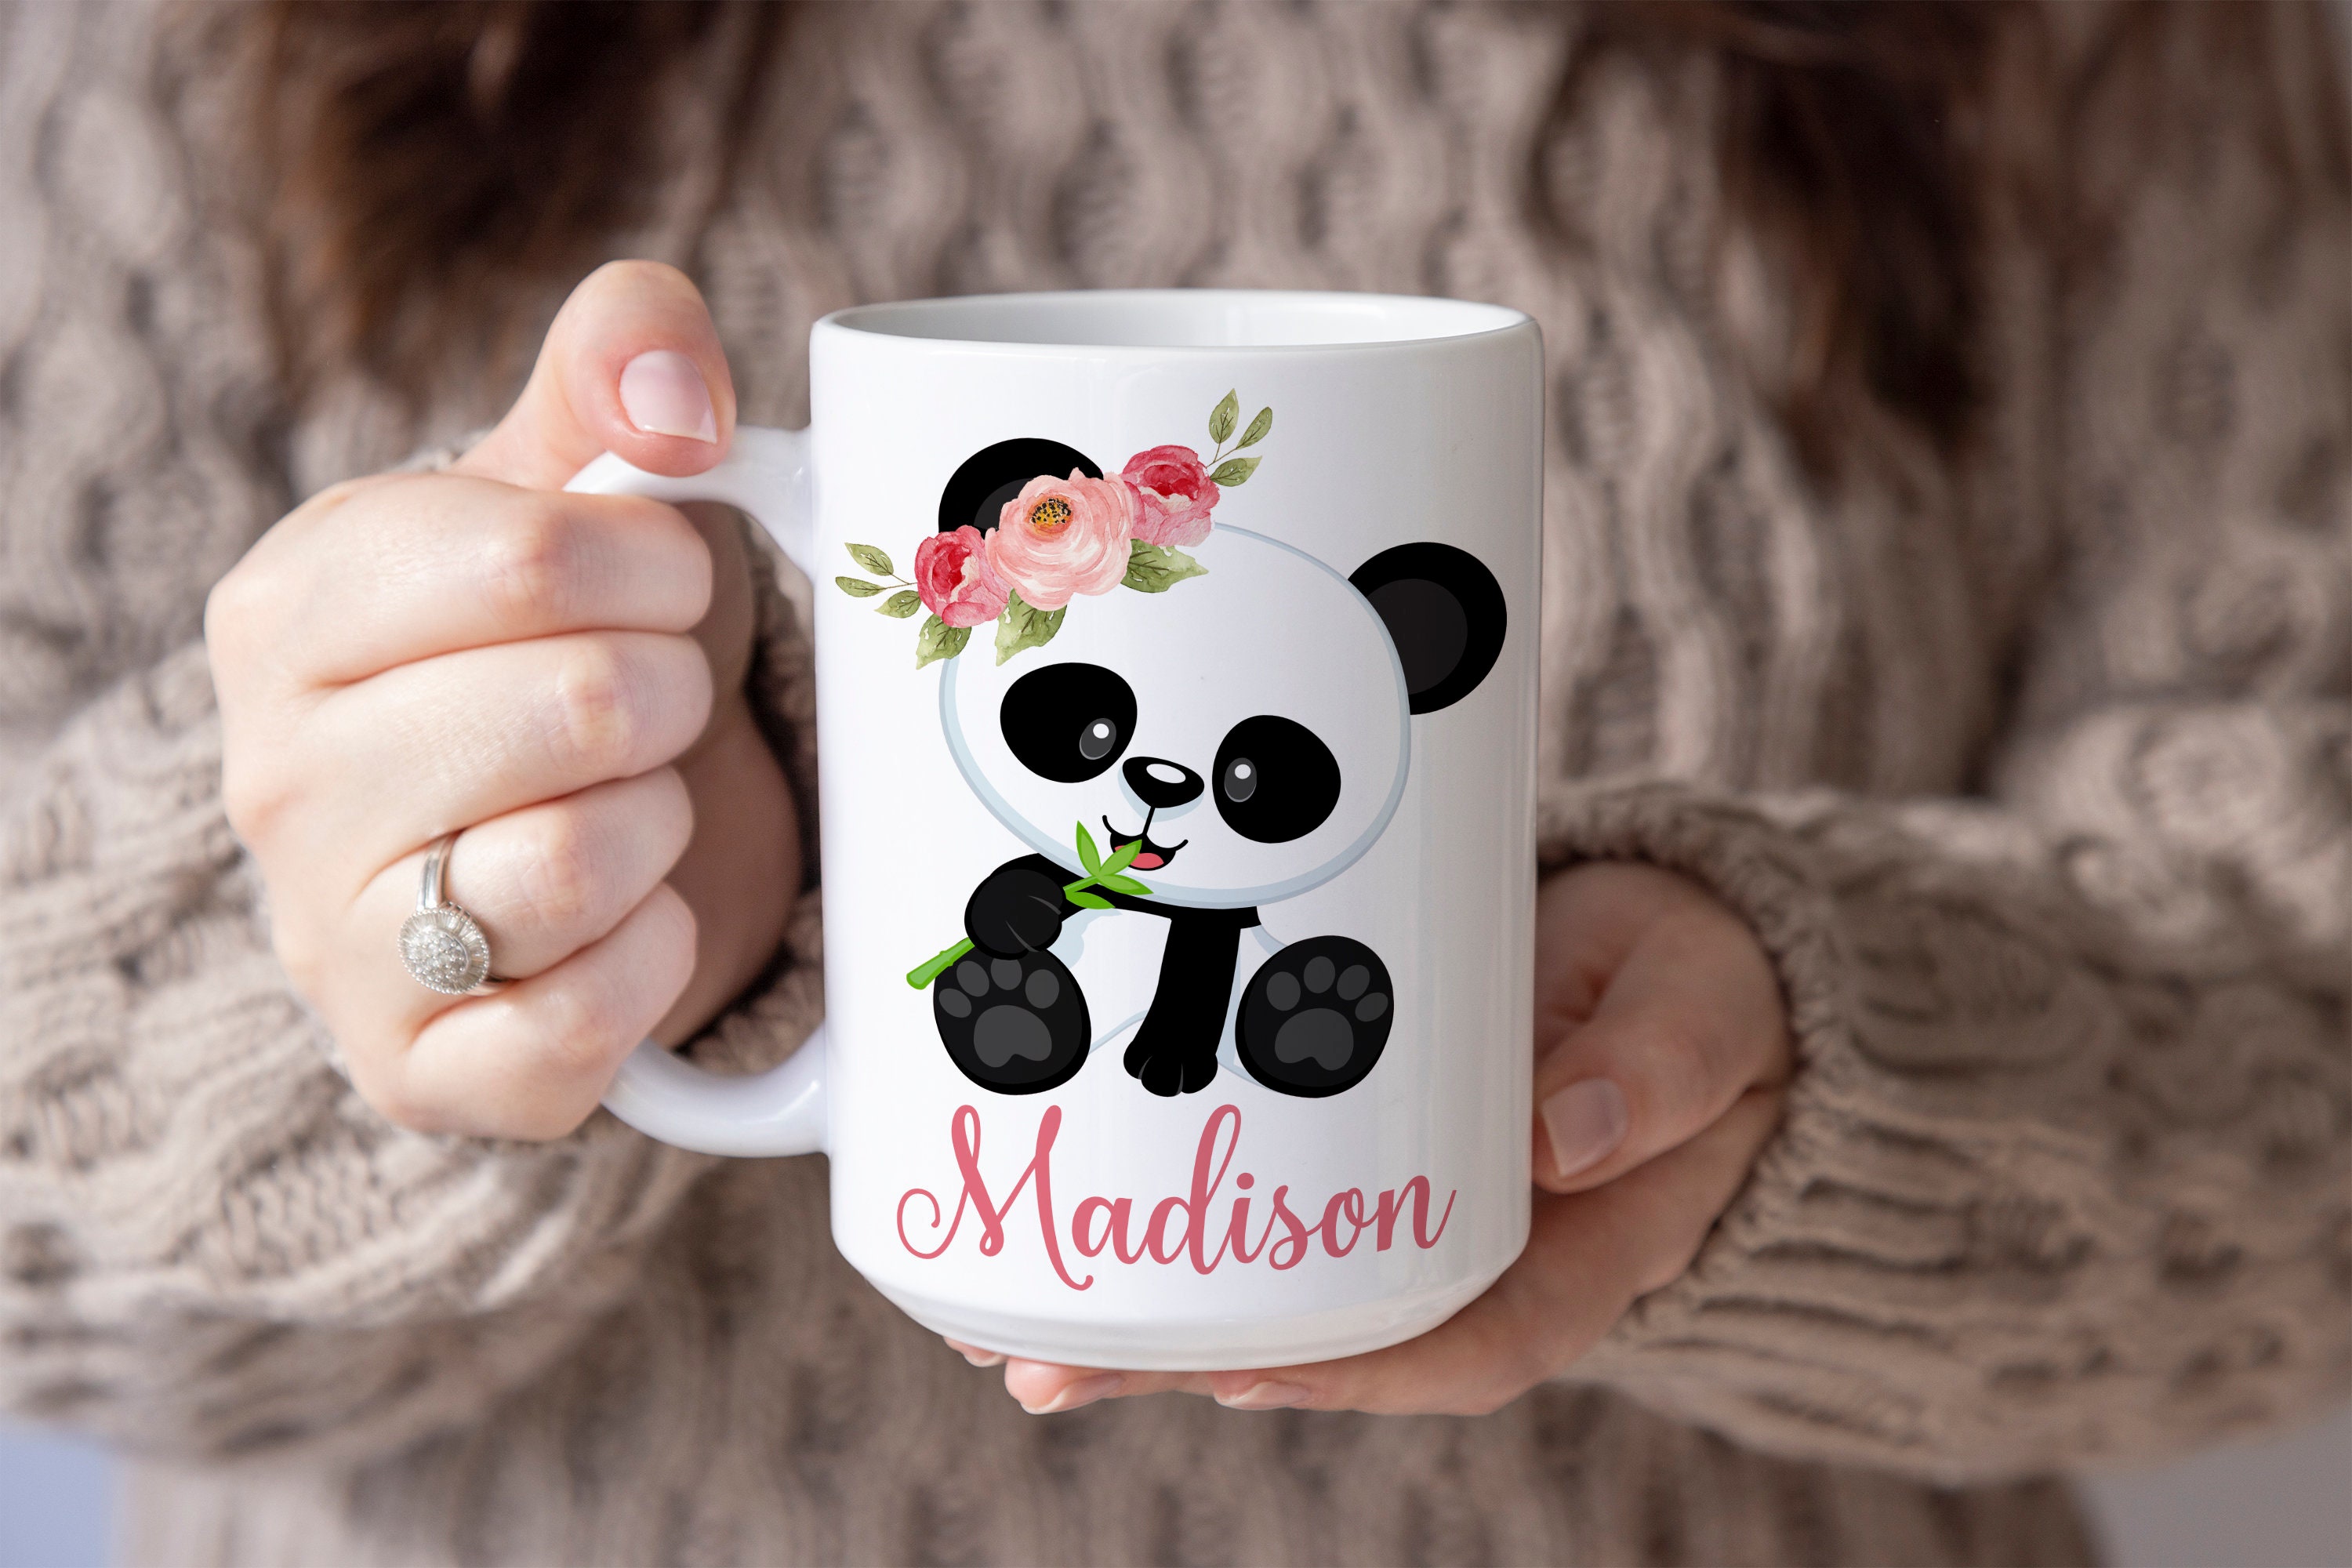 Cute Panda Mug Ceramic Pink Accent Coffee Cup 11oz Gift For Panda Lovers